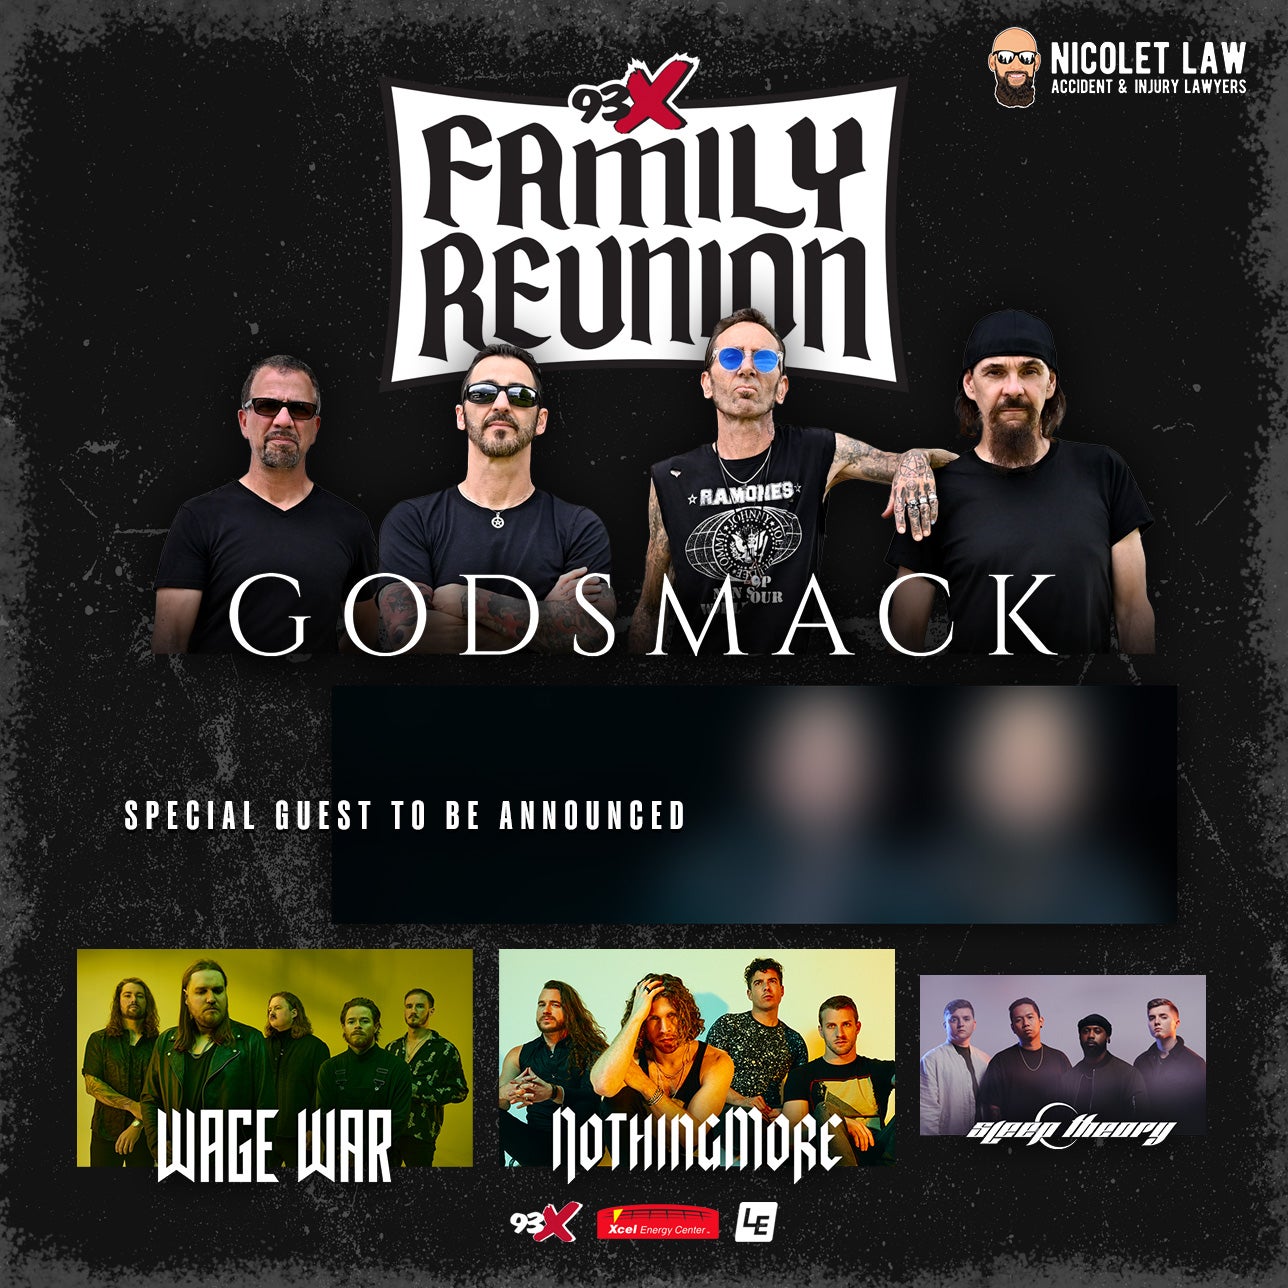 93X Family Reunion starring Godsmack